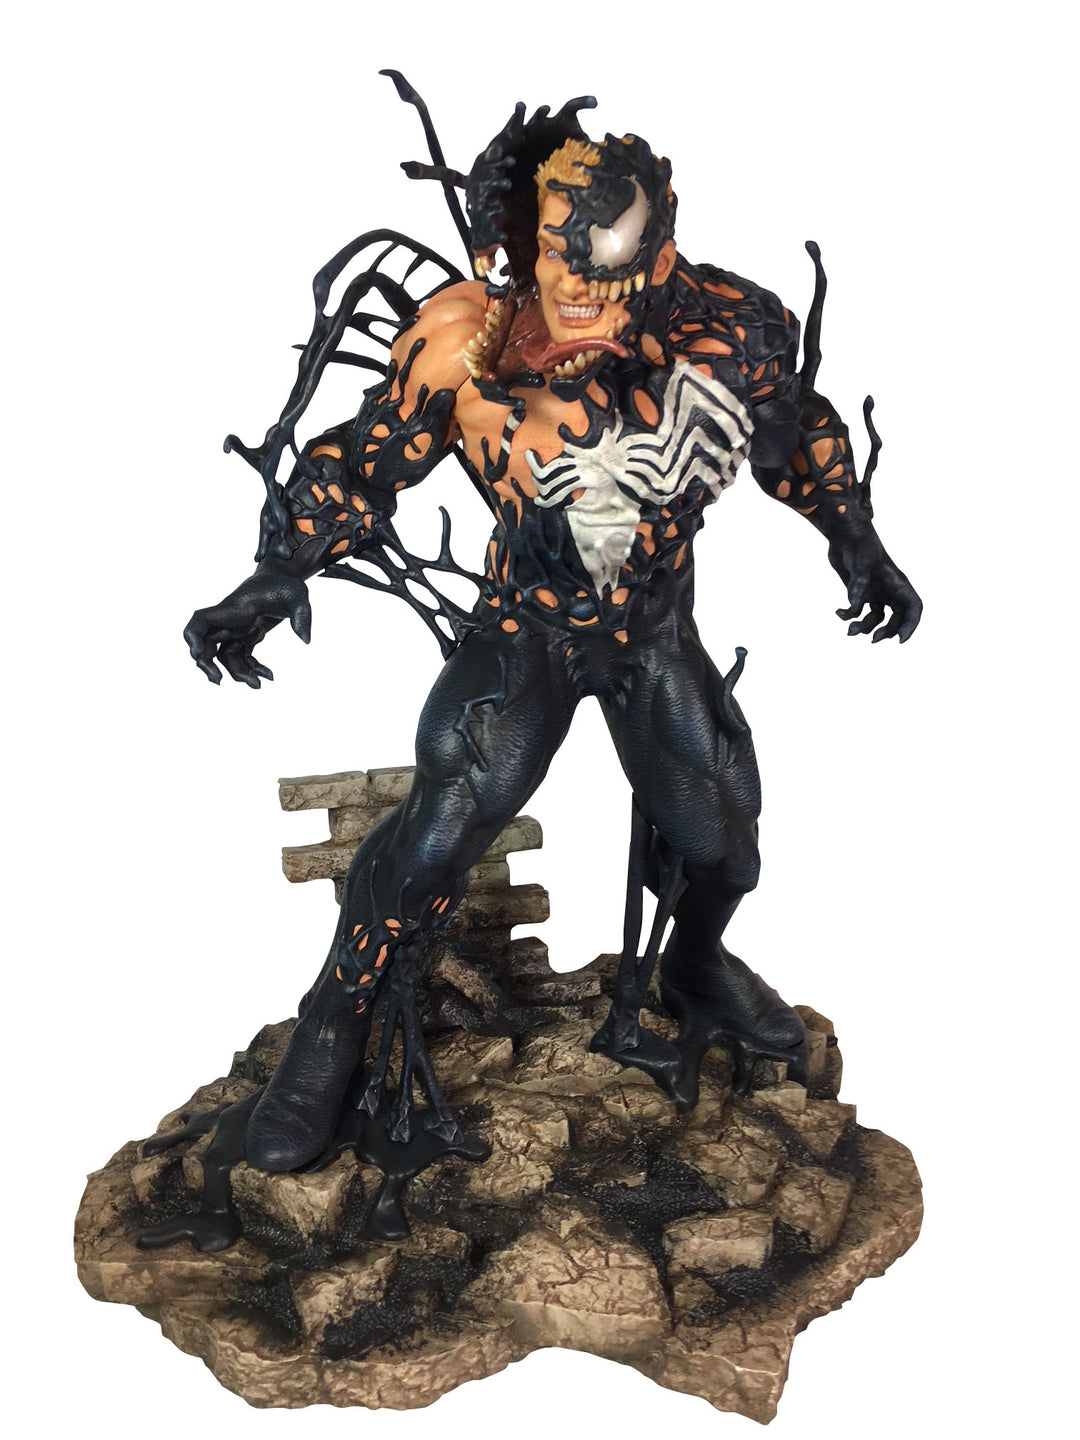 Marvel Gallery Venom Diorama Figure